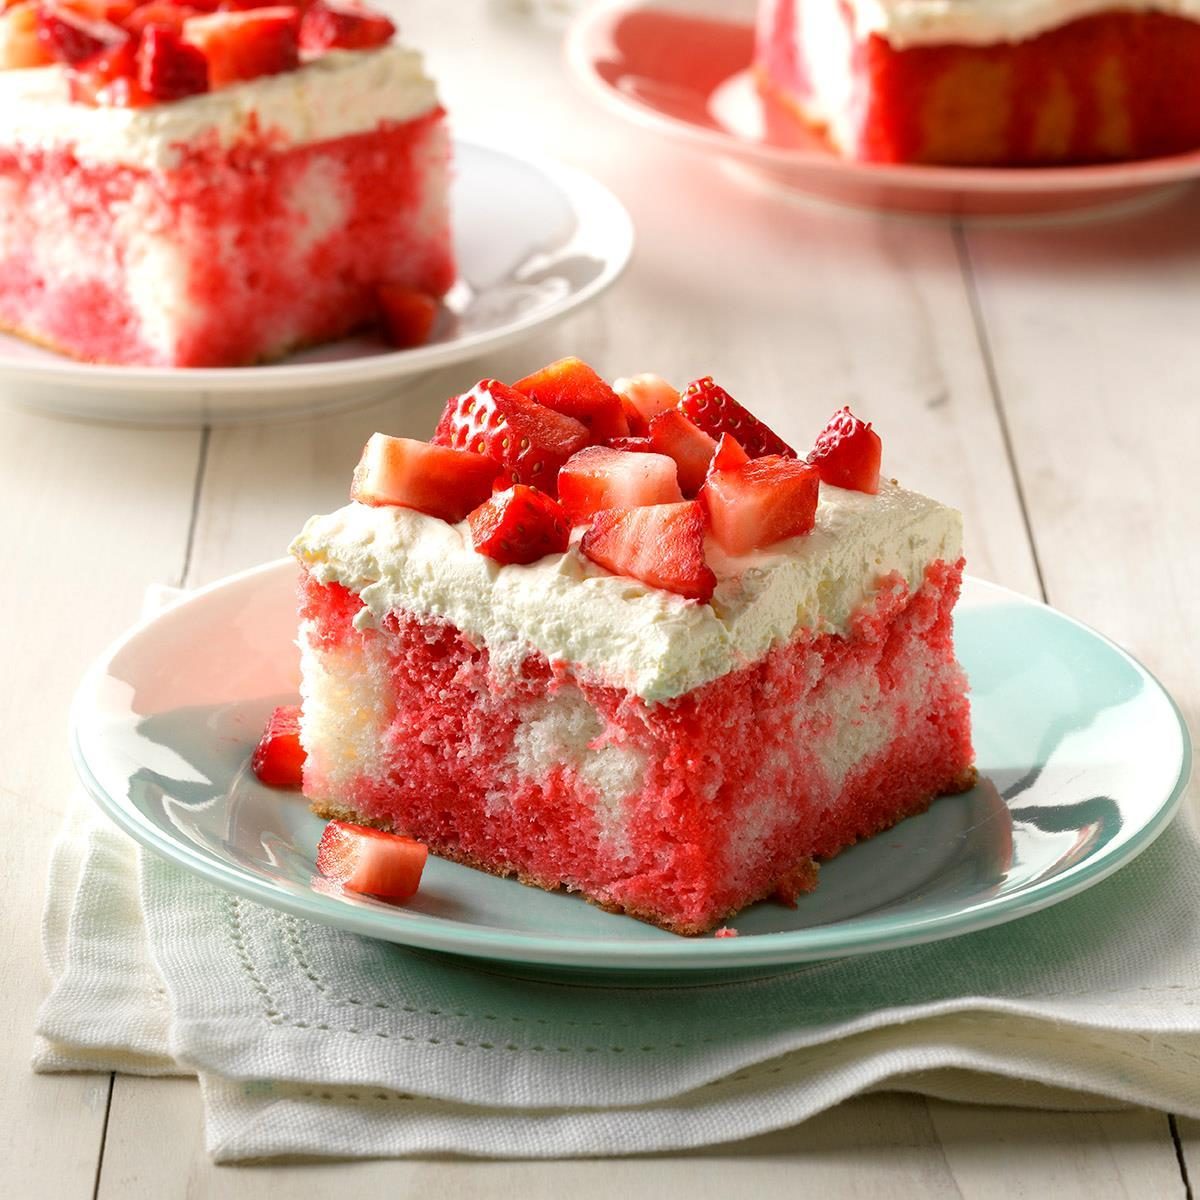 Berry Dream Cake Recipe: How to Make It